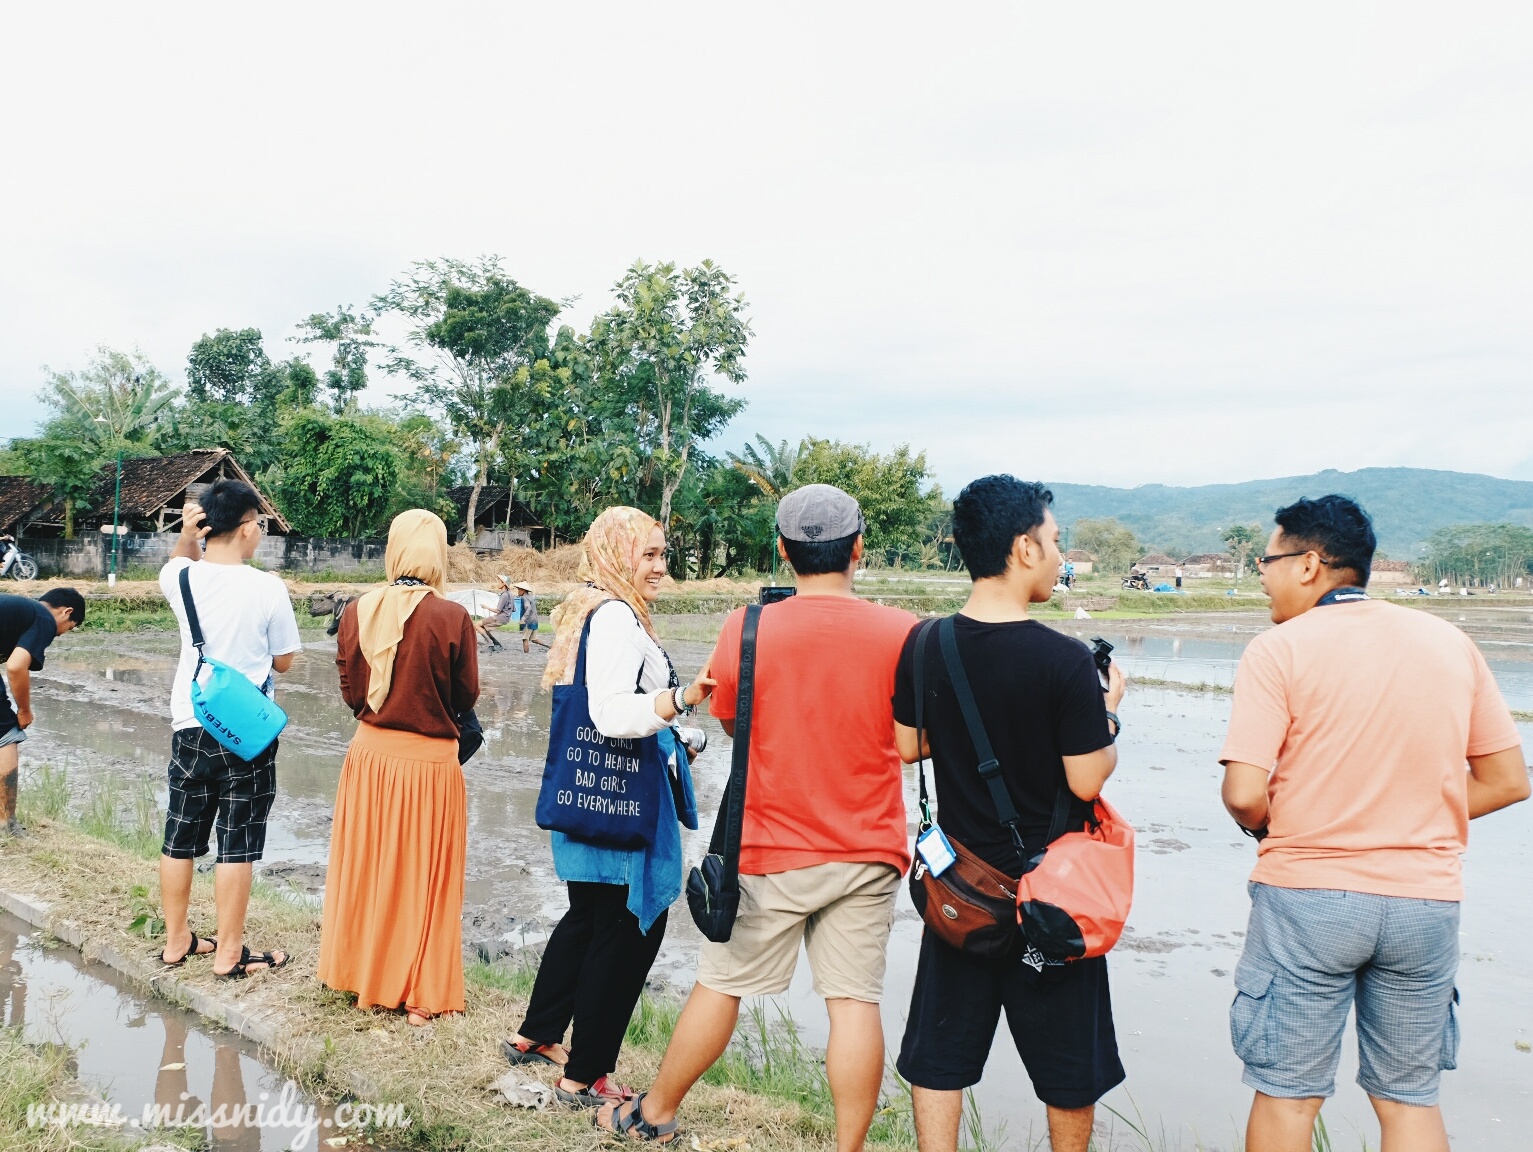 wisata menanam padi di desa wisata kebon agung bantul yogyakarta